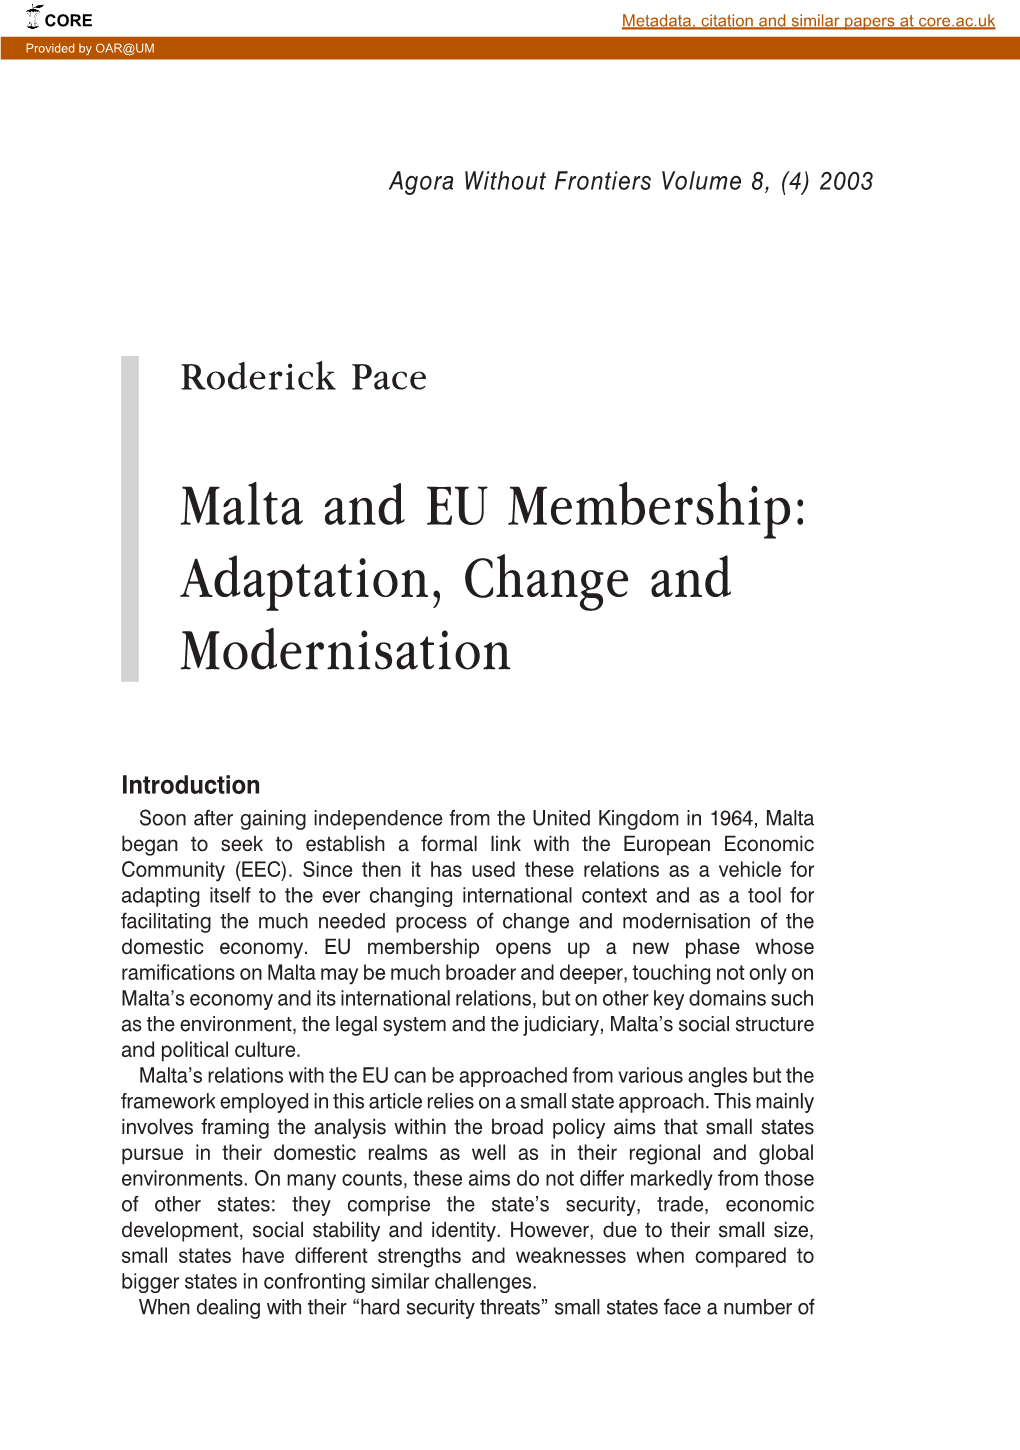 Malta and EU Membership: Adaptation, Change and Modernisation